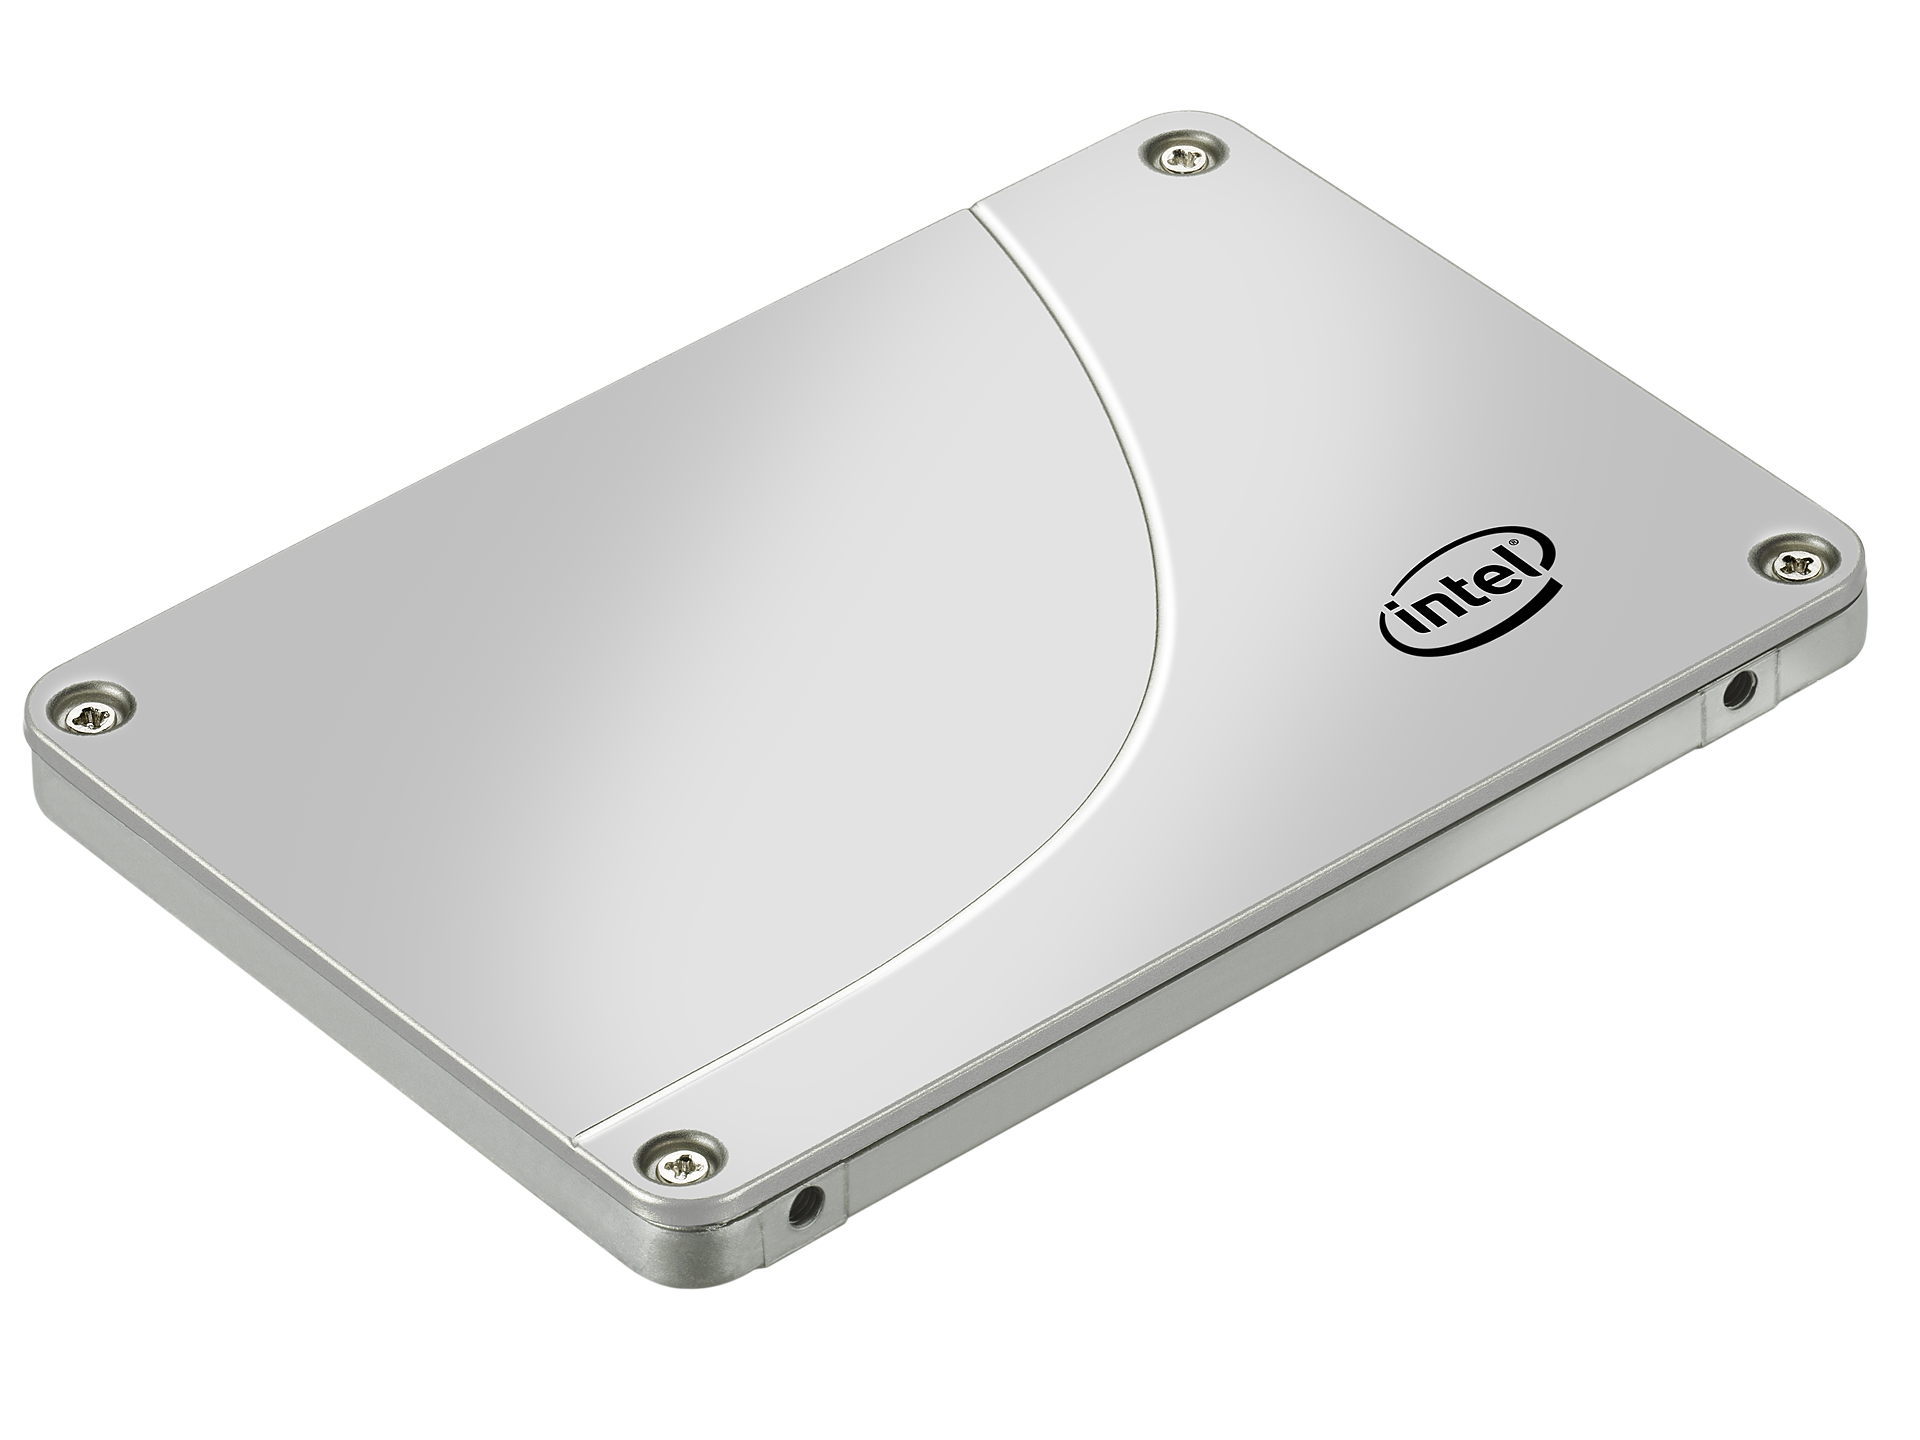 SSD 520 Series 120GB review | TechRadar